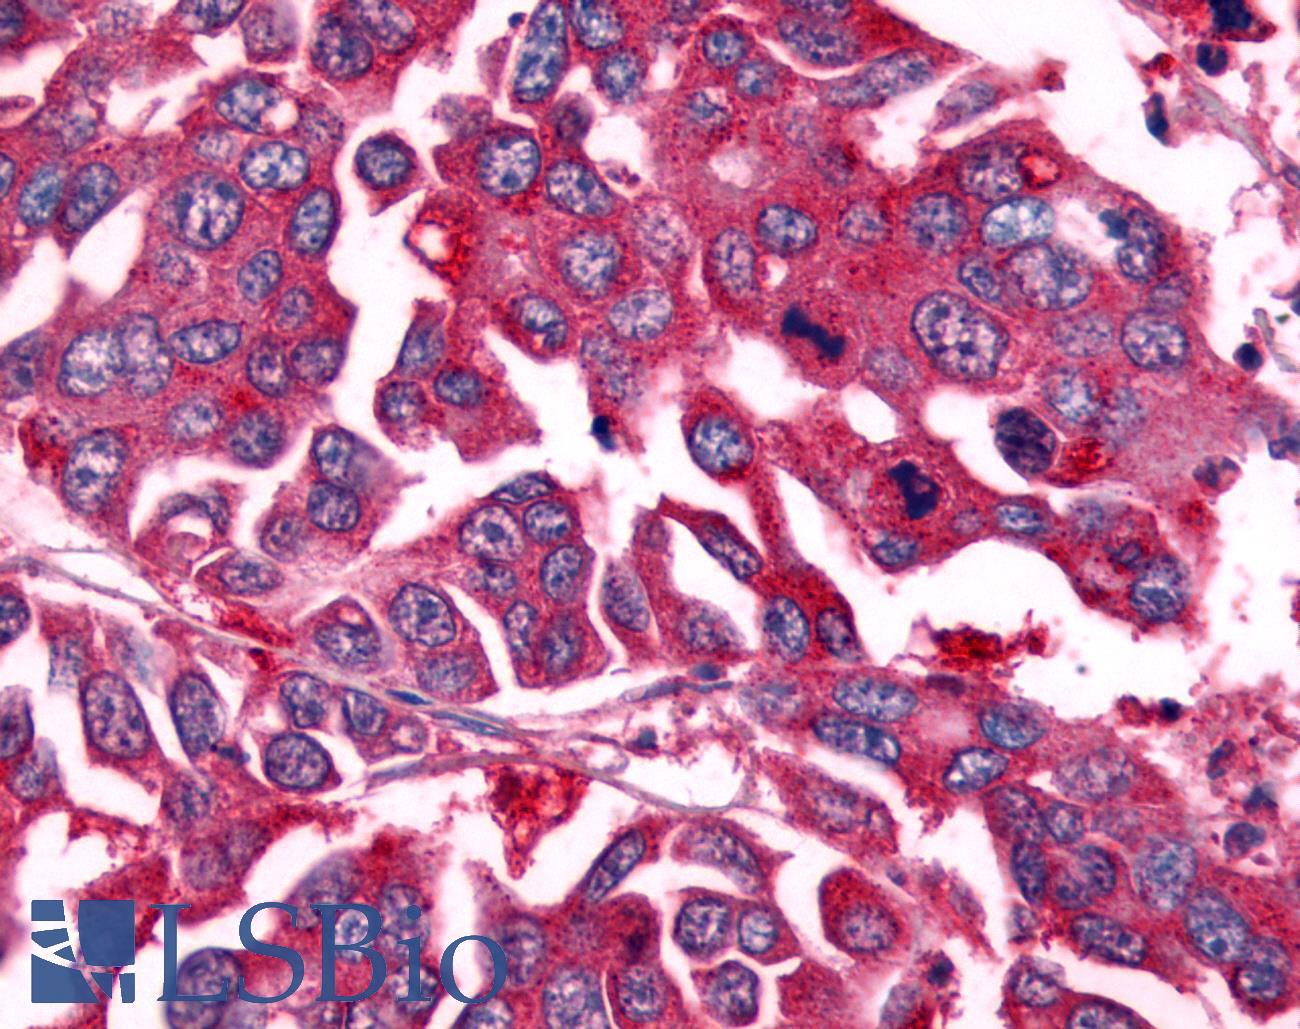 NEK7 Antibody - Colon carcinoma